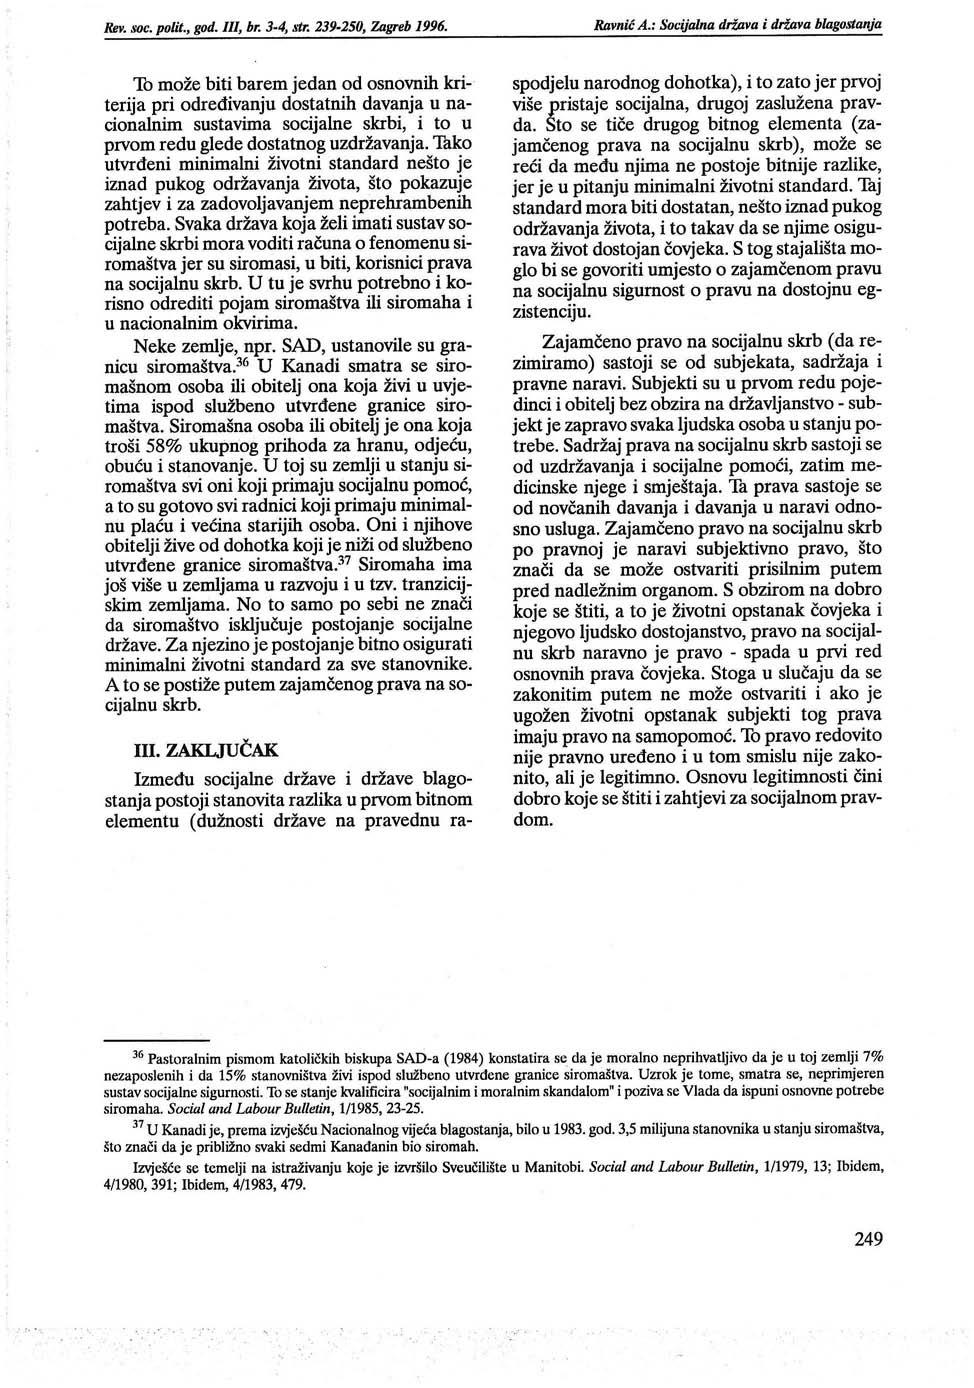 Rev. sac. polit., god. III, br. 3-4, str. 239 250, Zagreb 1996. Bavnić A.